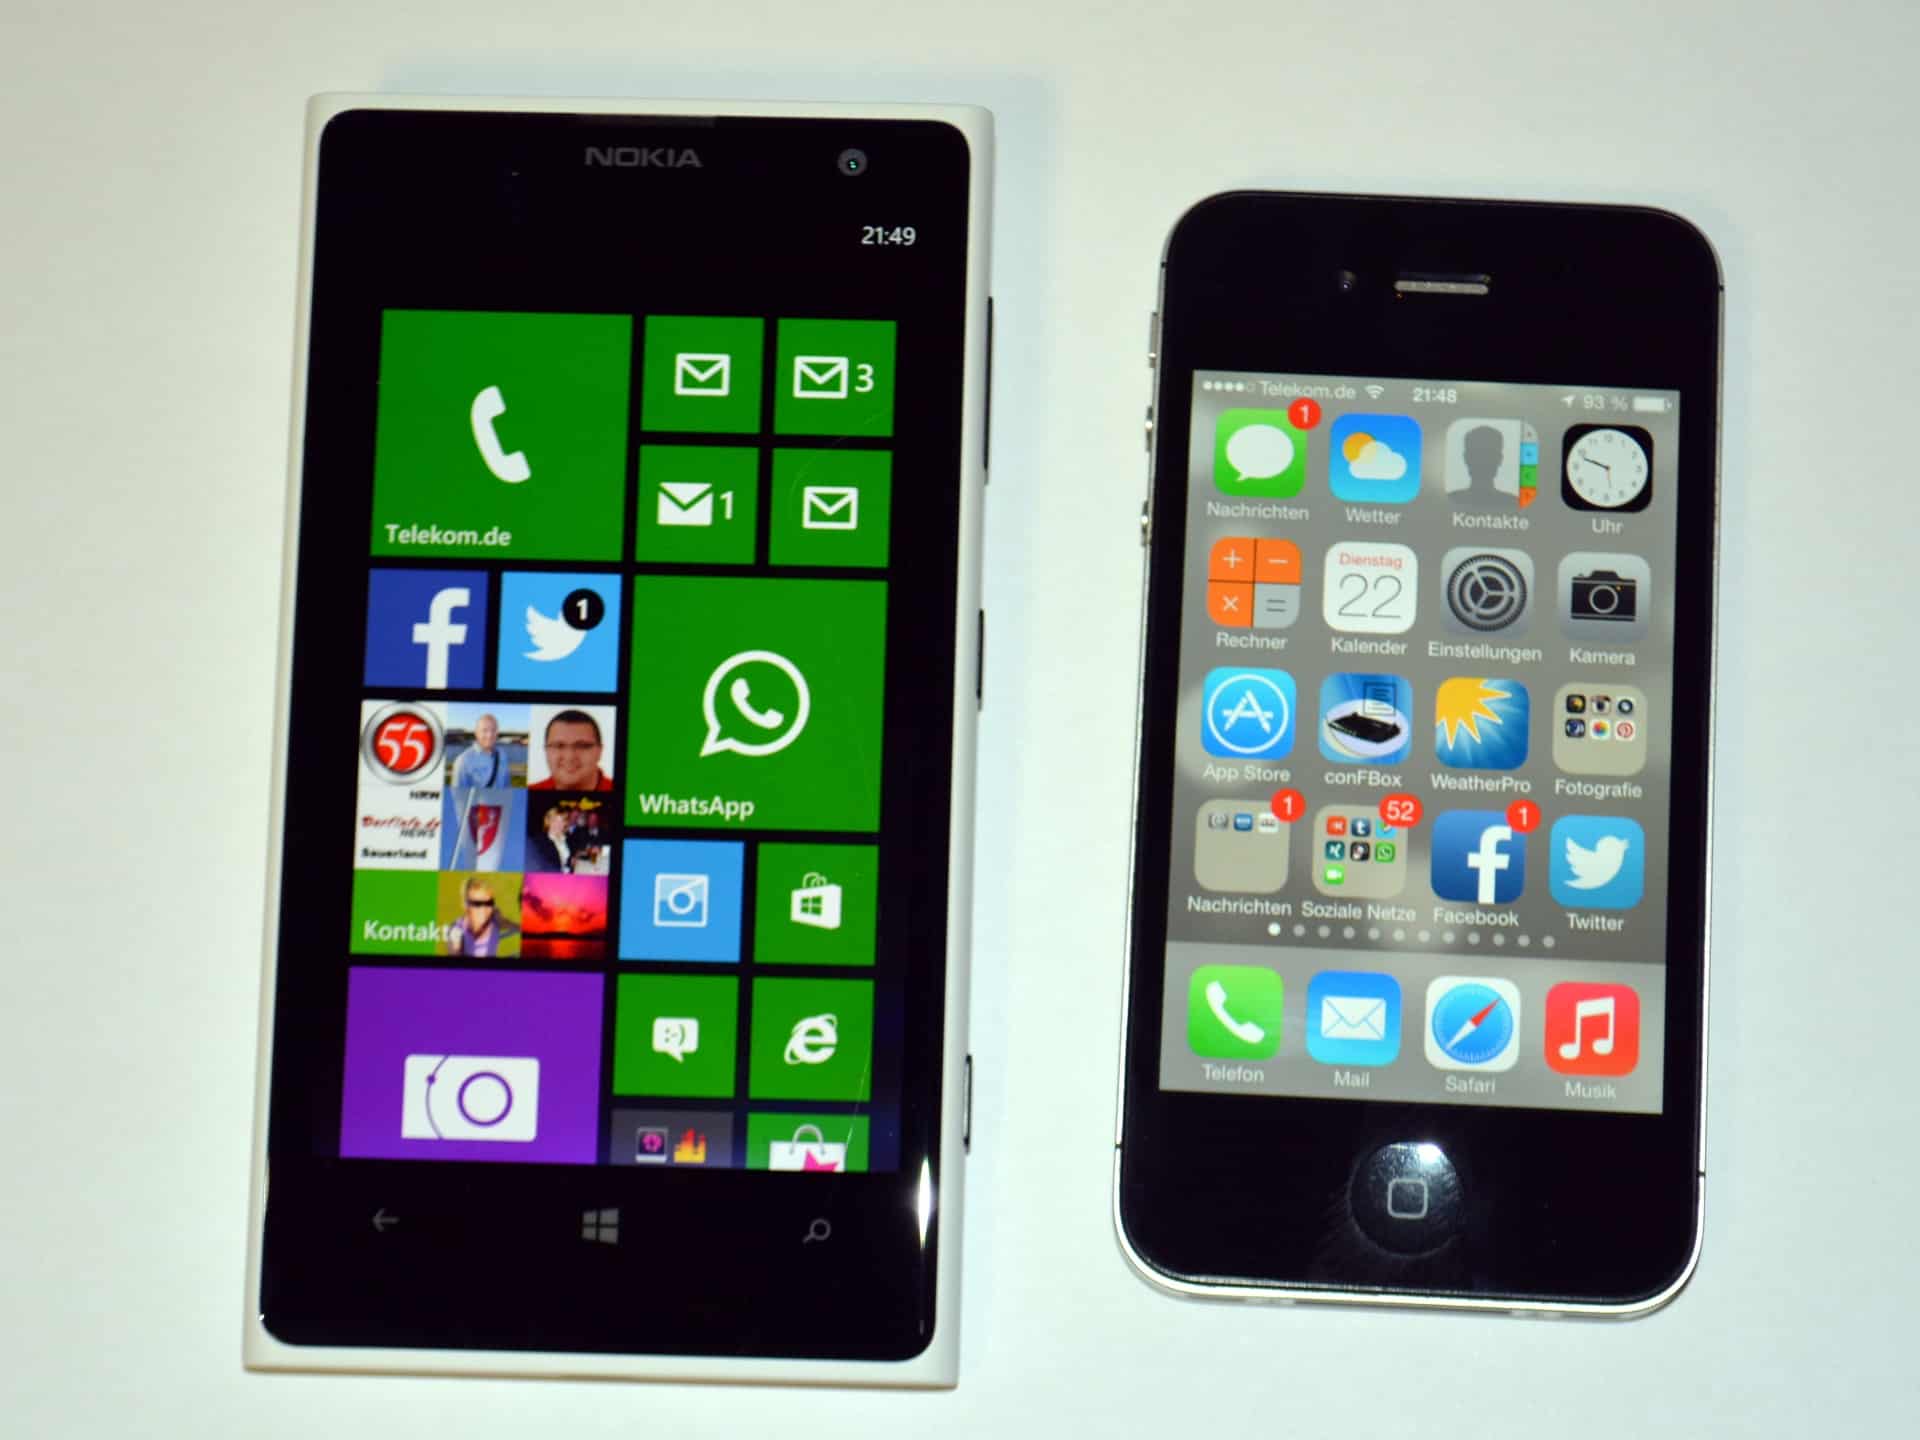 Nokia Lumia 1020 WindowsPhone 8 vs. Apple iPhone 4S iOS 7_1